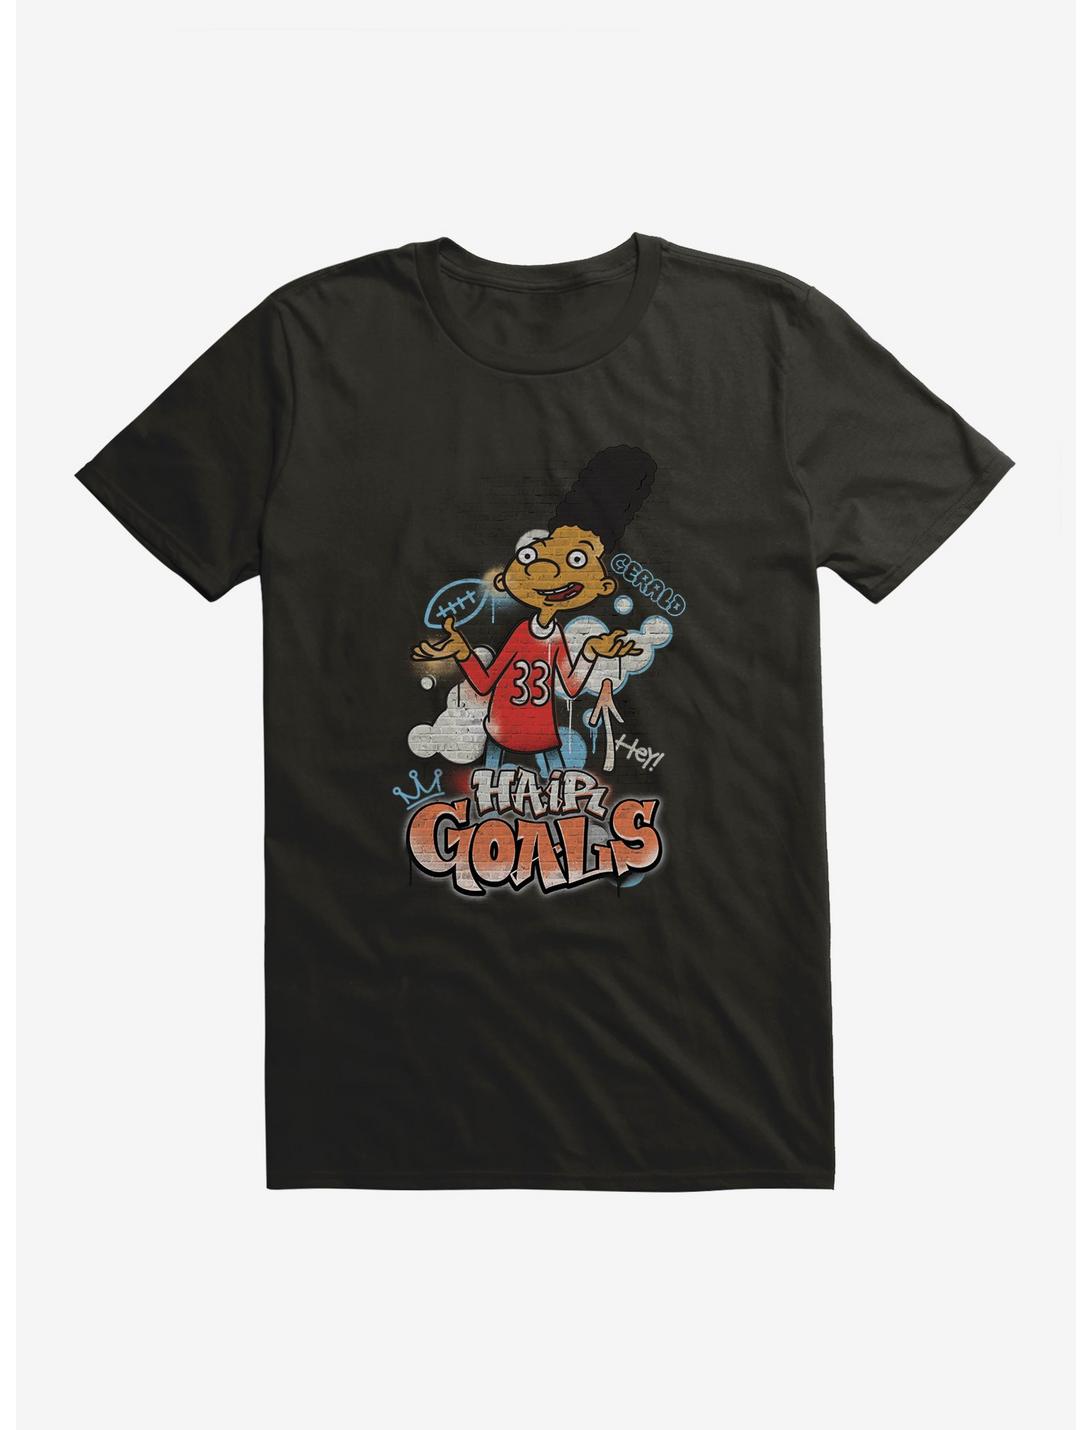 Hey Arnold! Gerald Hair Goals T-Shirt, , hi-res